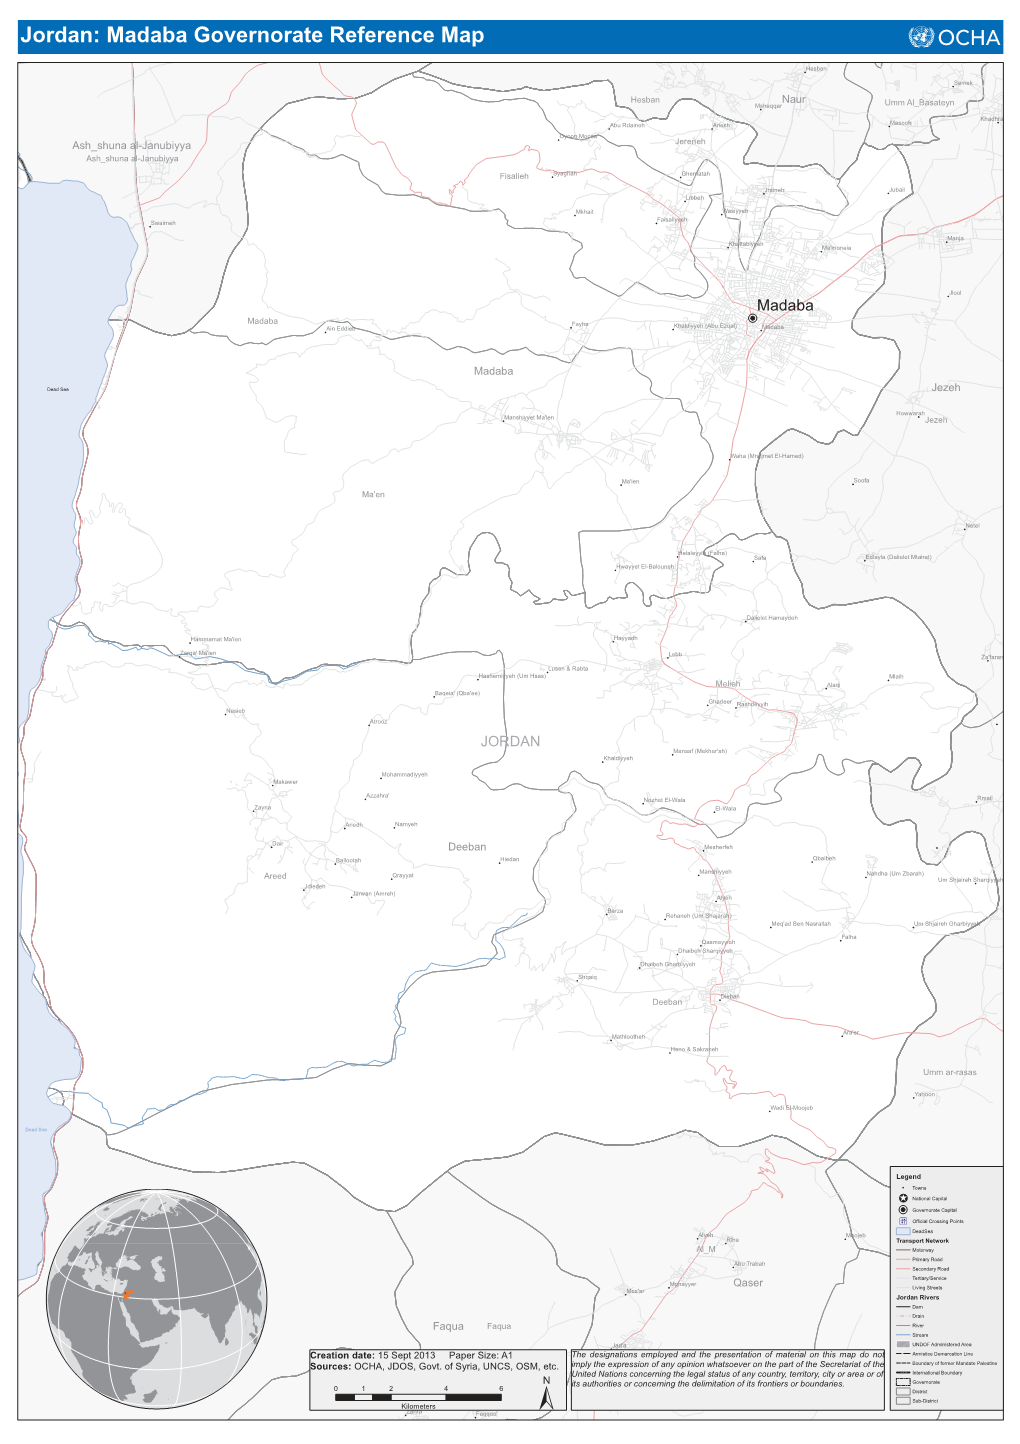 Jordan Madaba Governorate Reference Map 